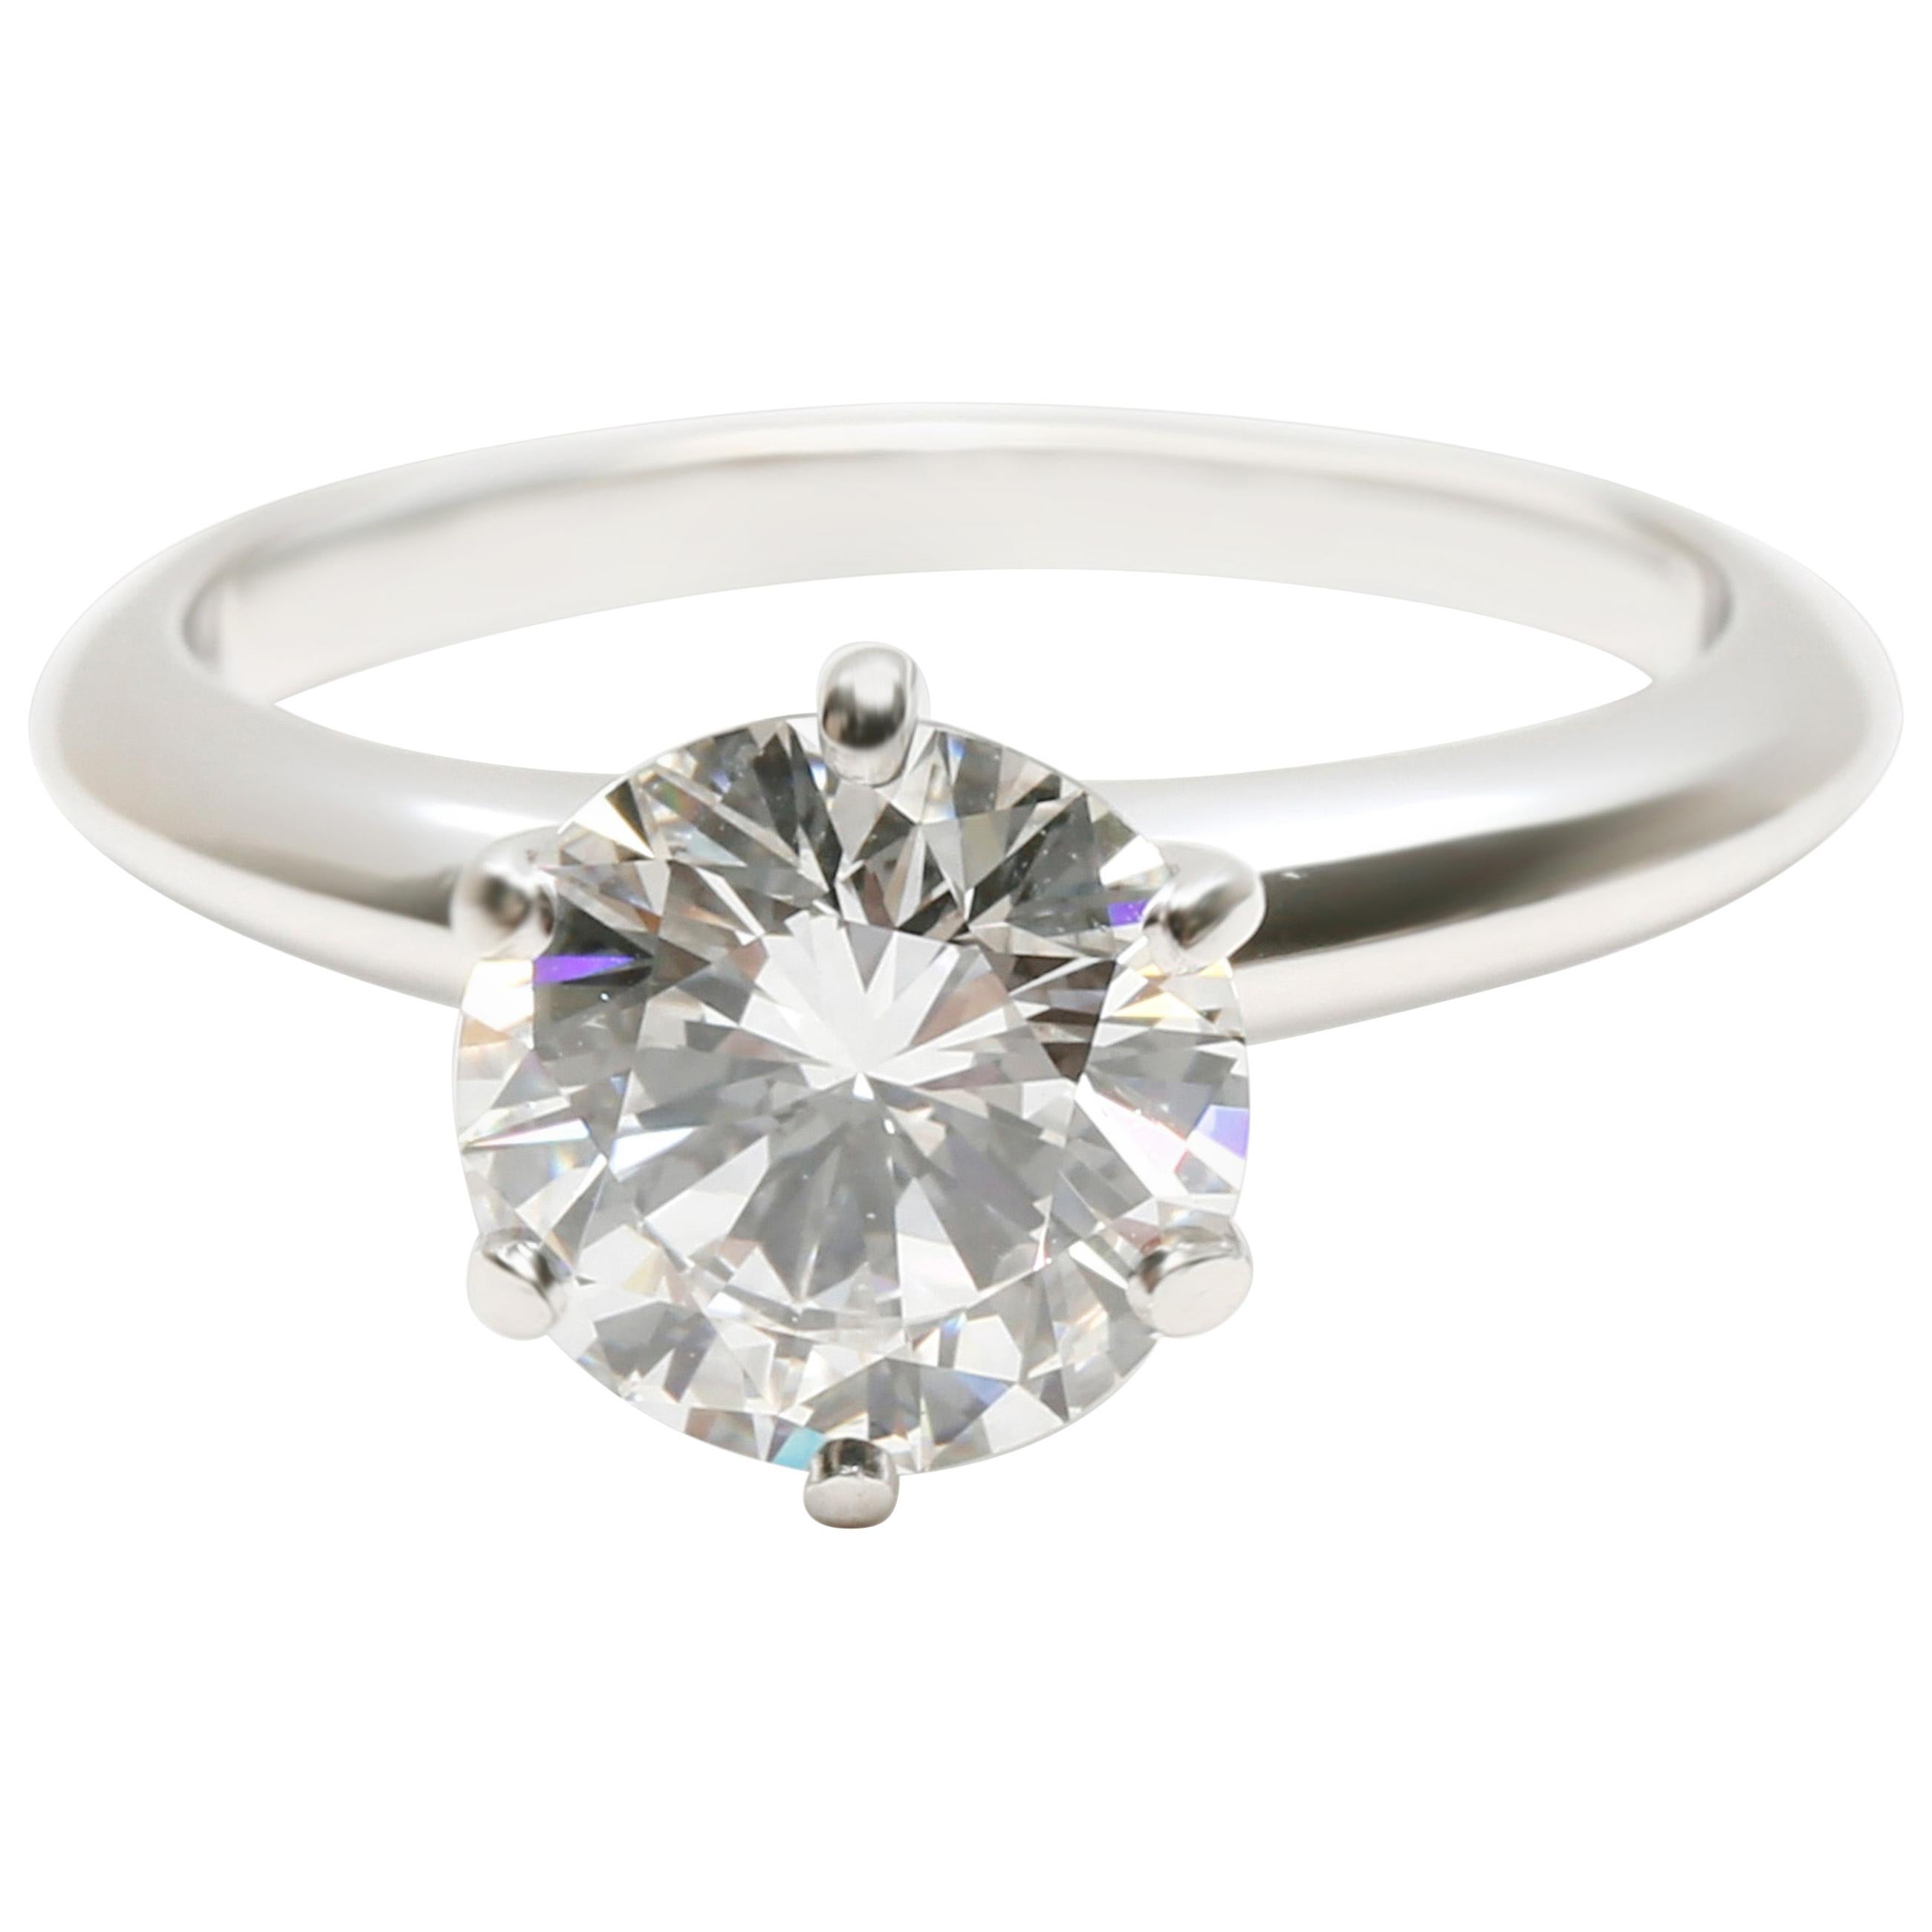 Tiffany & Co. Diamond Solitaire Engagement Ring in Platinum '1.54 Carat F VVS2'